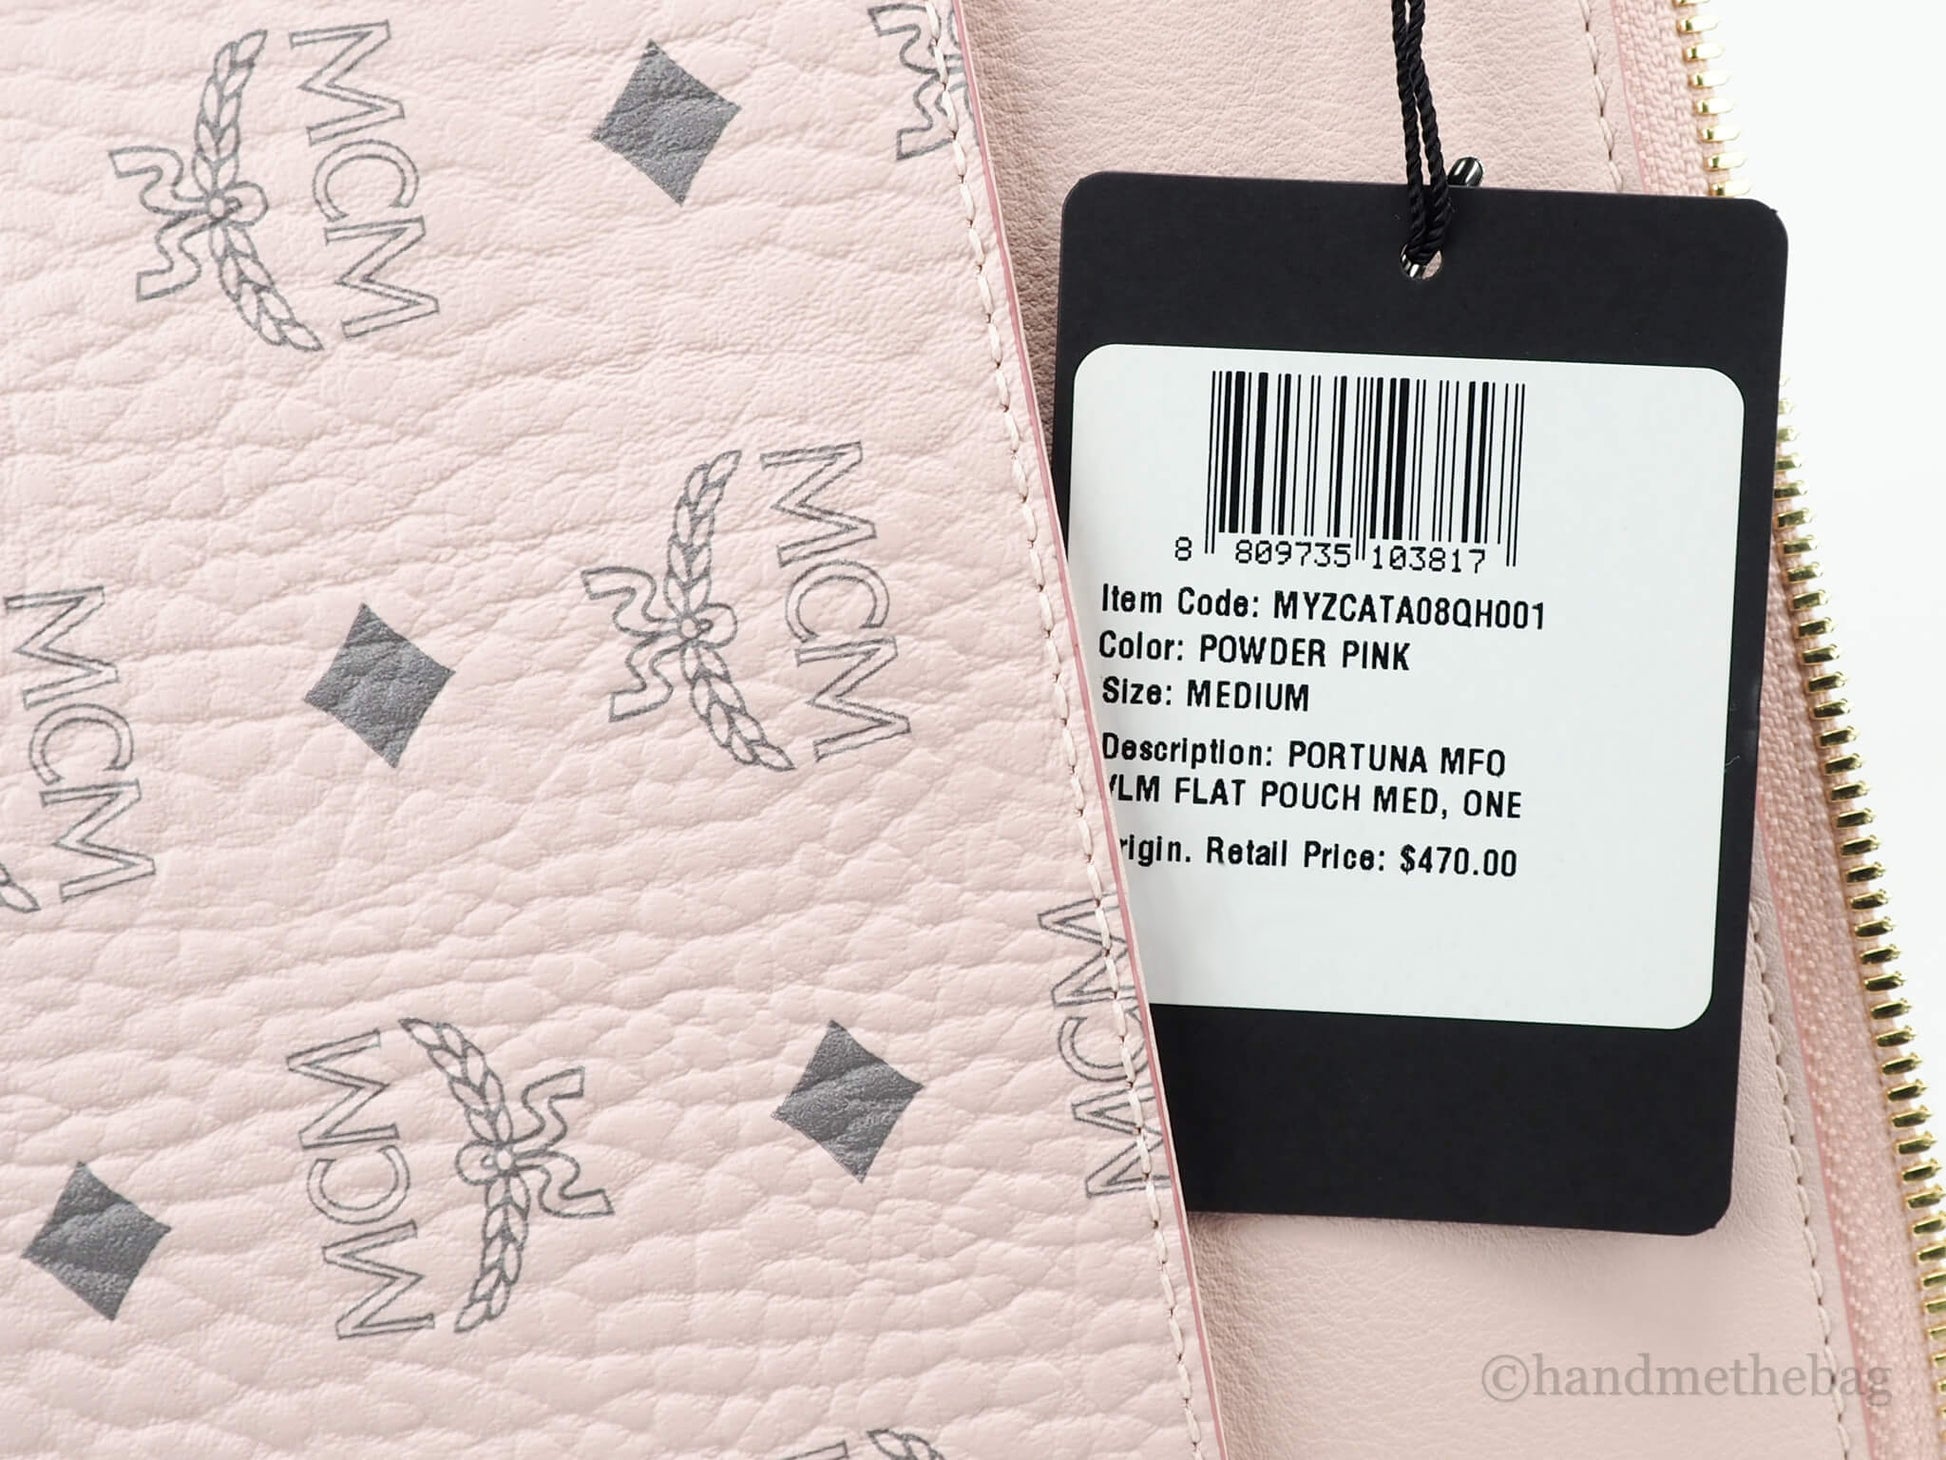 MCM portuna powder pink flat pouch tag on white background